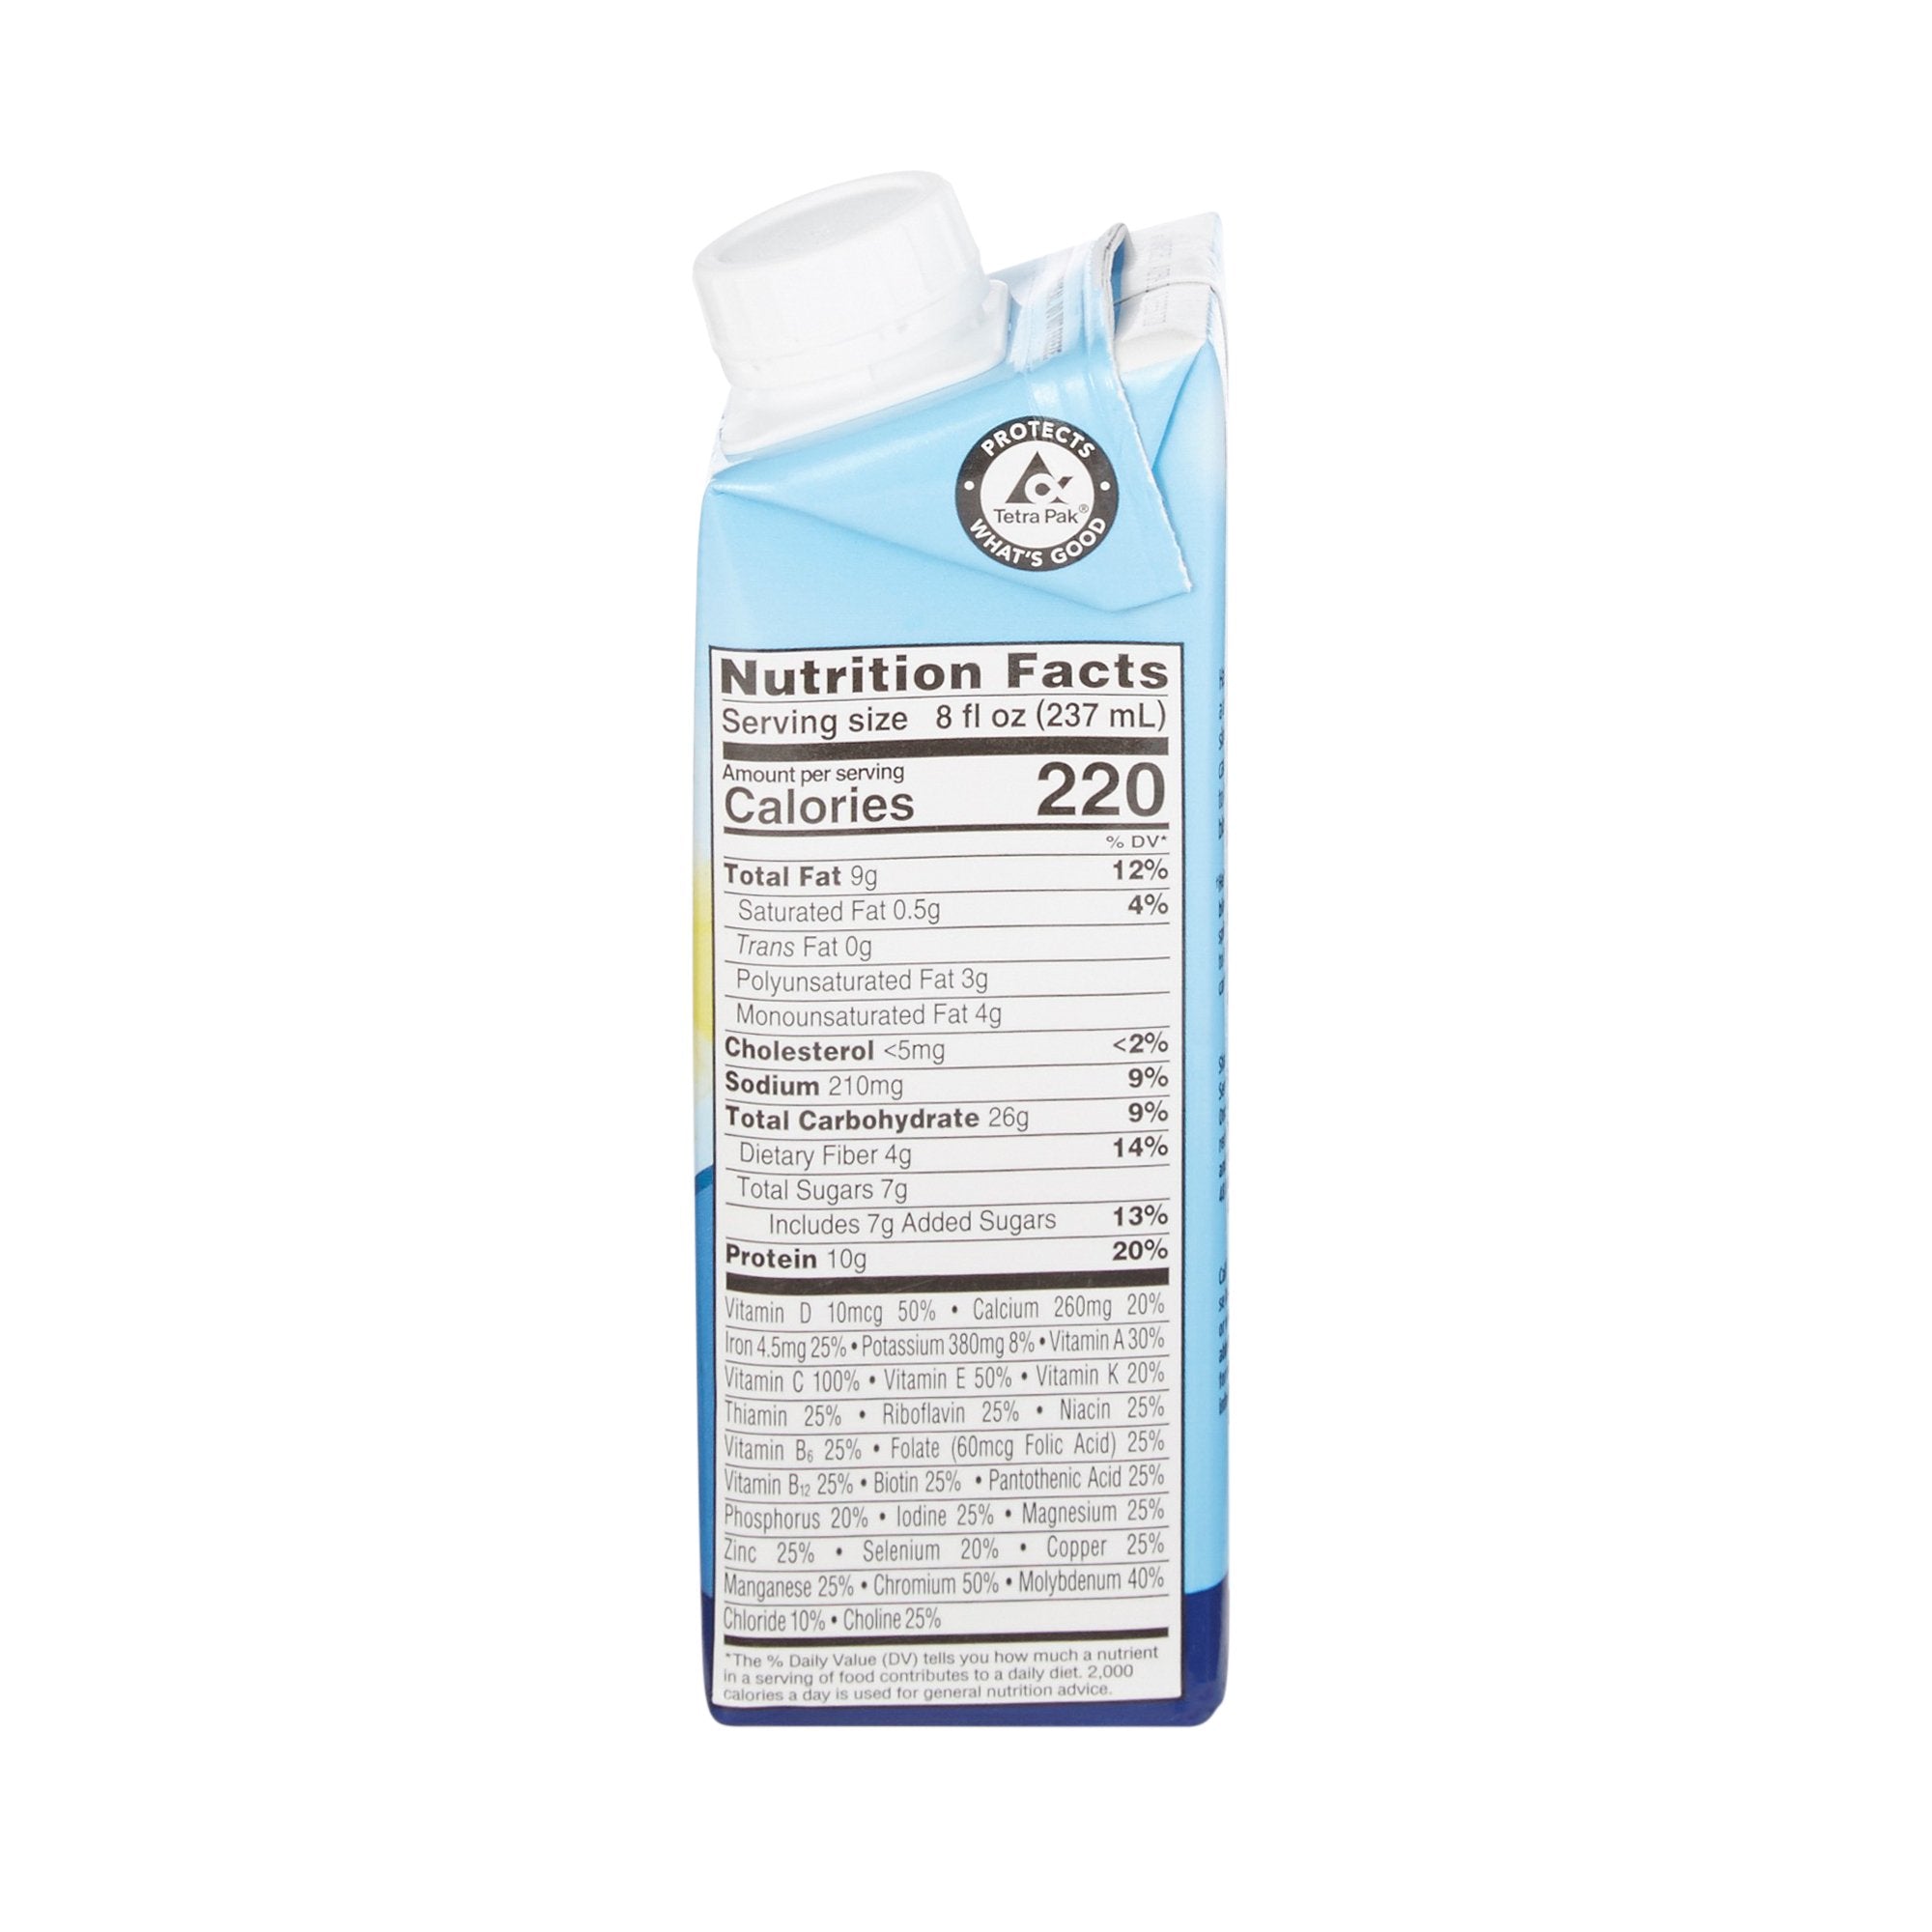 Oral Supplement Glucerna Therapeutic Nutrition Shake Vanilla Flavor Liquid 8 oz. Carton